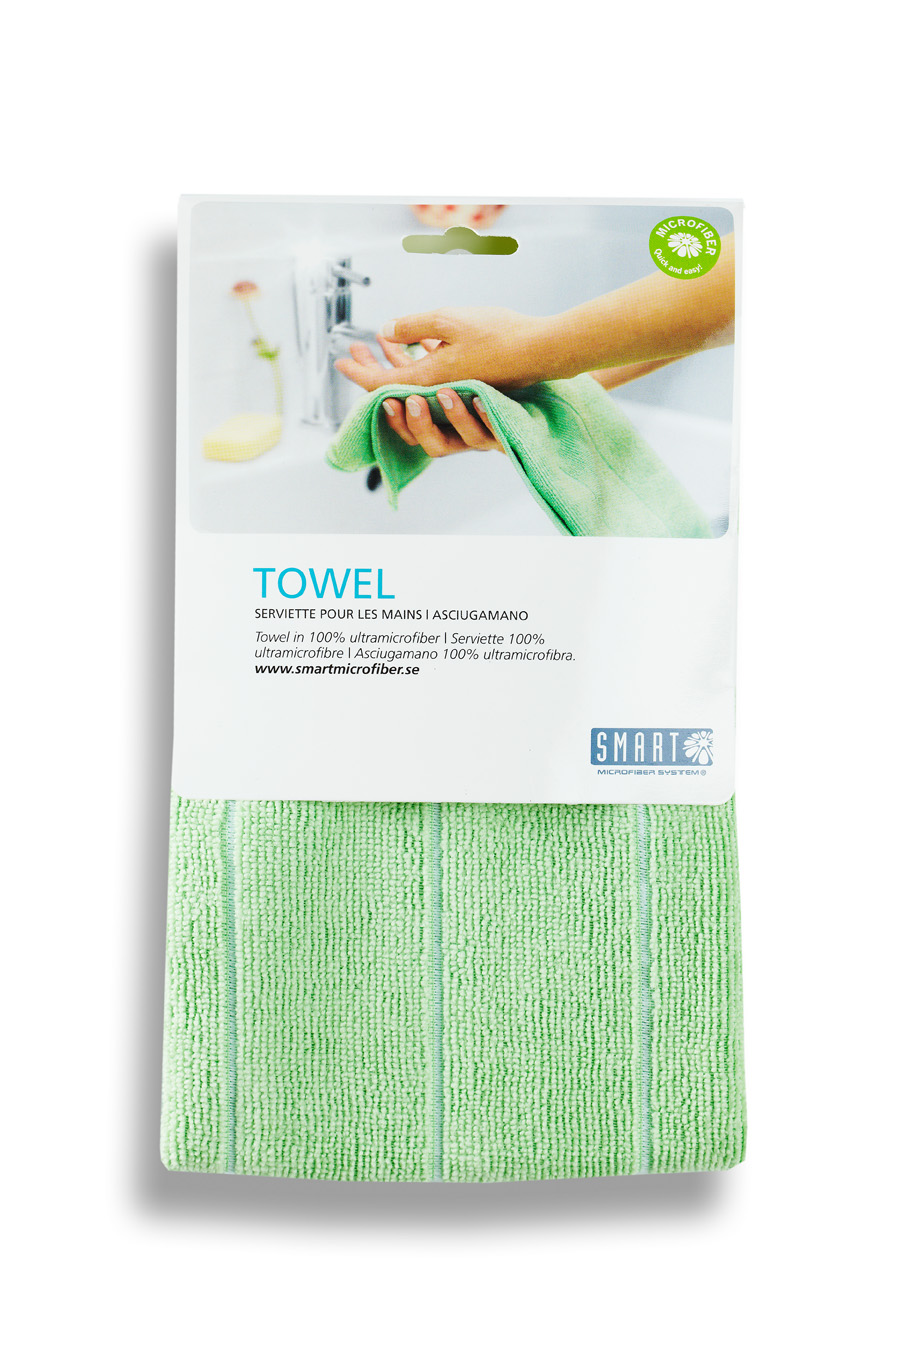 Ultimate Microfiber Cleaning Bundle - Kitchen Dish Matt / Cloth 12-12 /  Cloth 16-16 / Sponge / Microfiber TowelPurchase